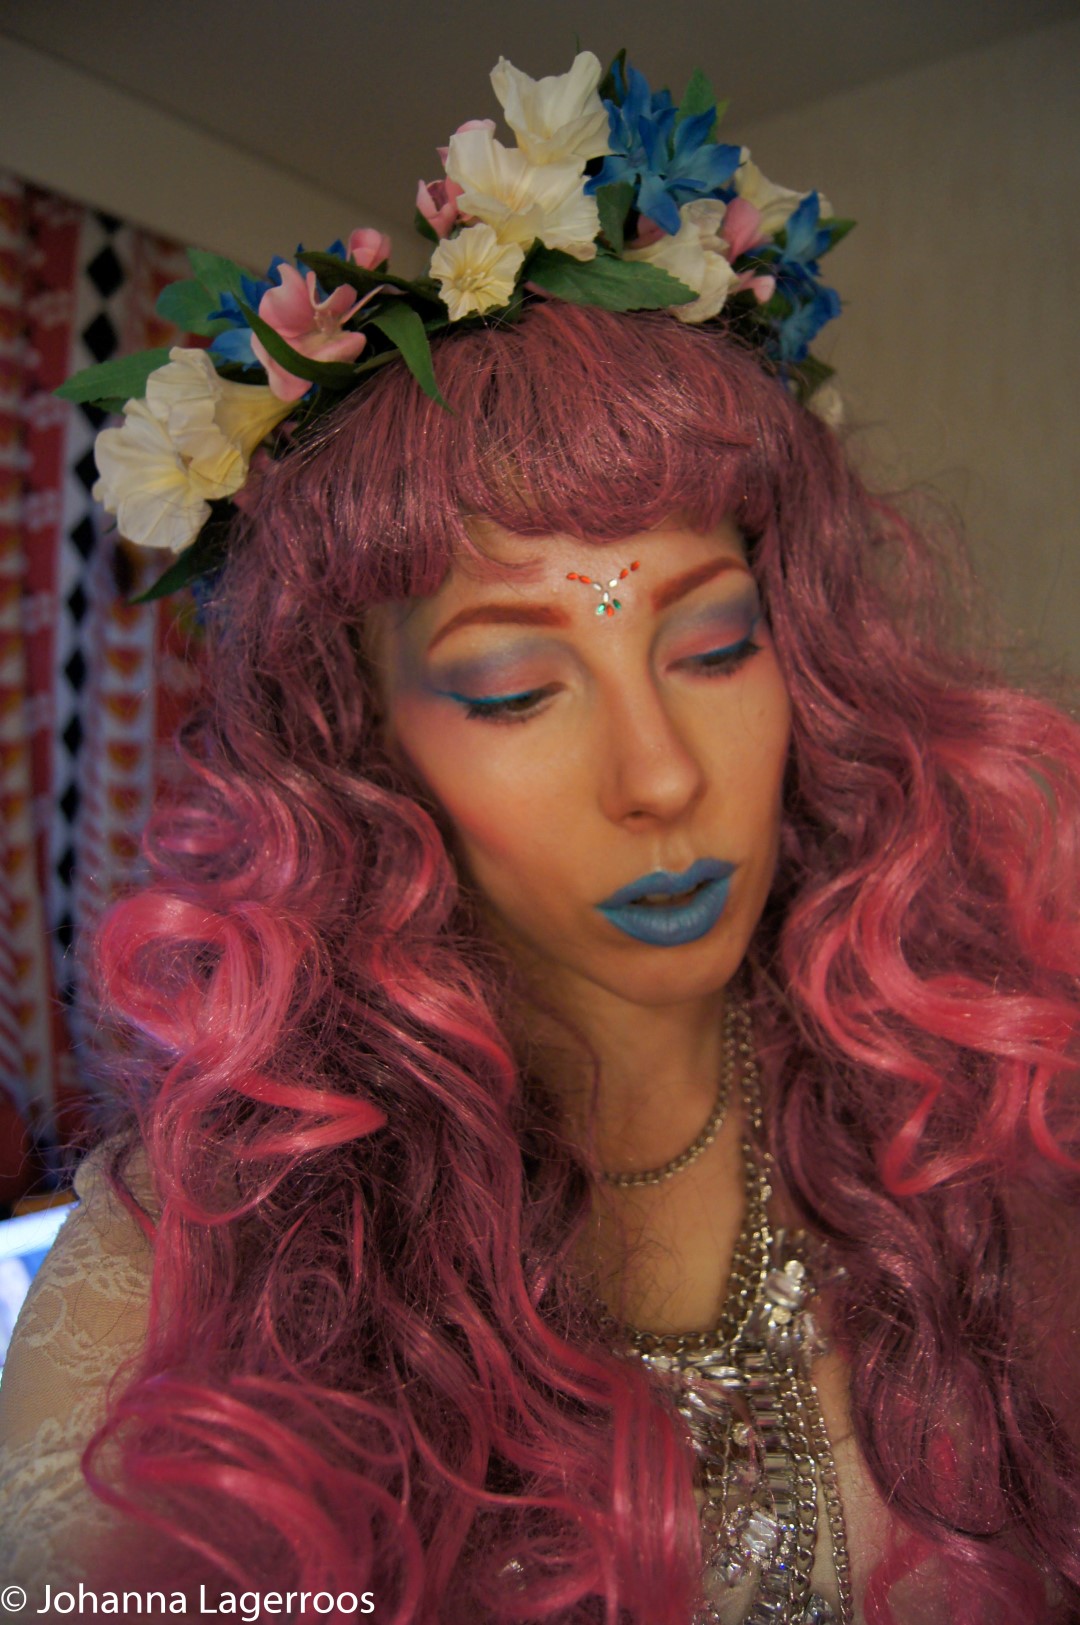 colorful makeup